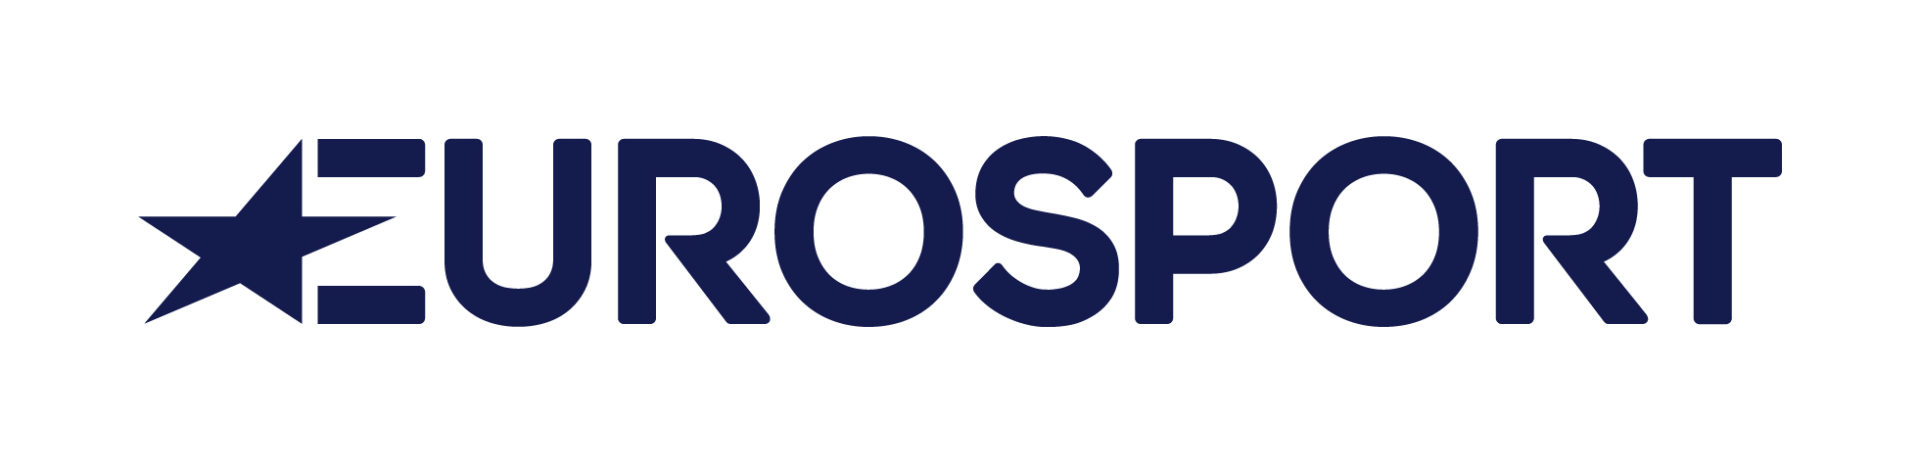 Eurosport Asia-Pacific – Website Development (2014, HK)